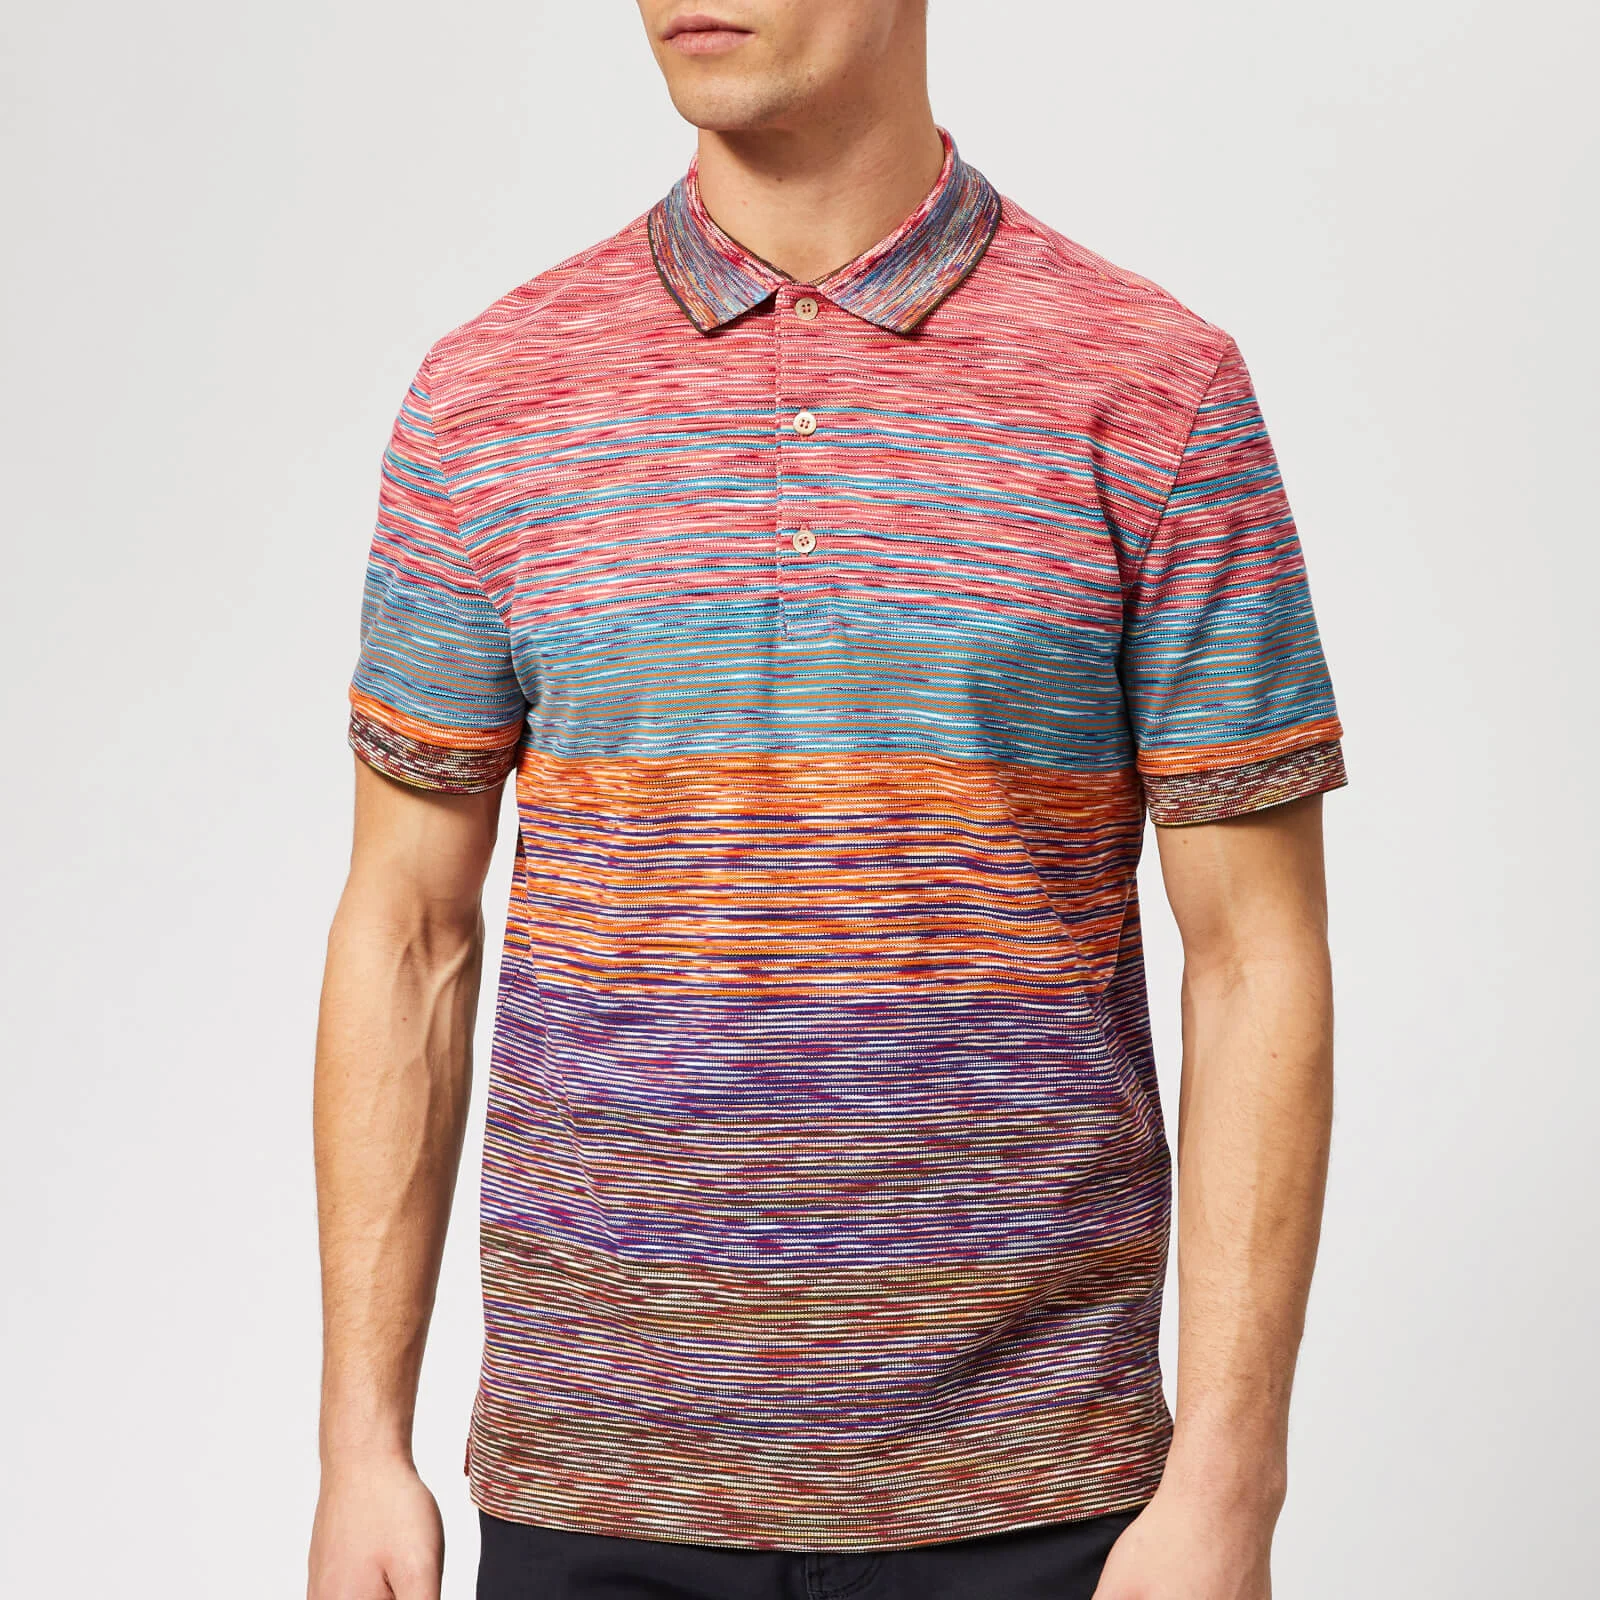 Missoni Men's Stripe Pique Polo Shirt - Multi Image 1